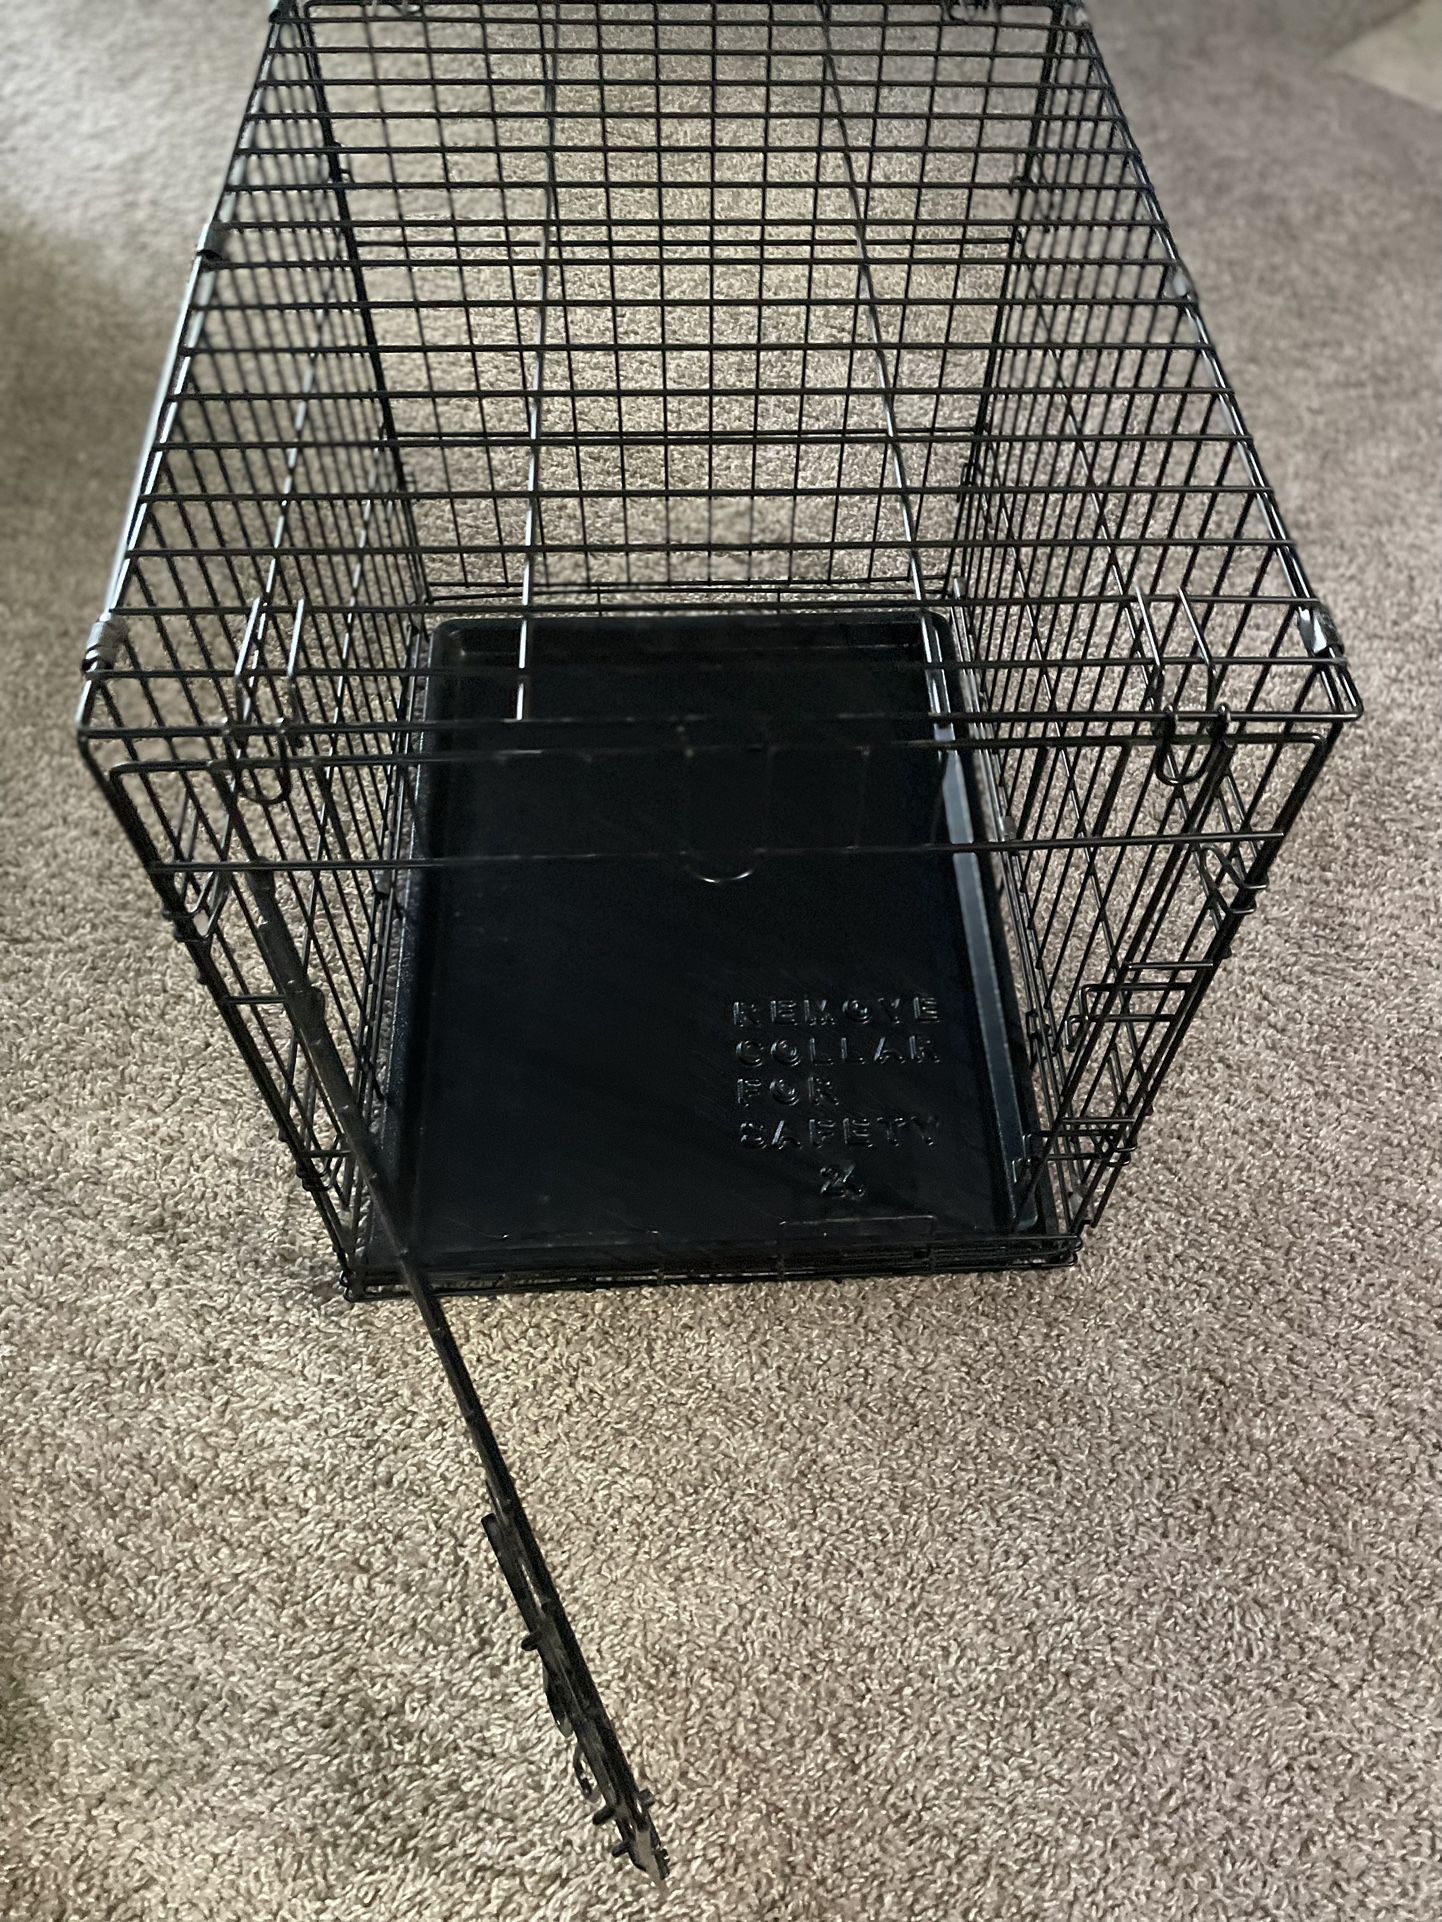 Medium Size Dog Crate (black)